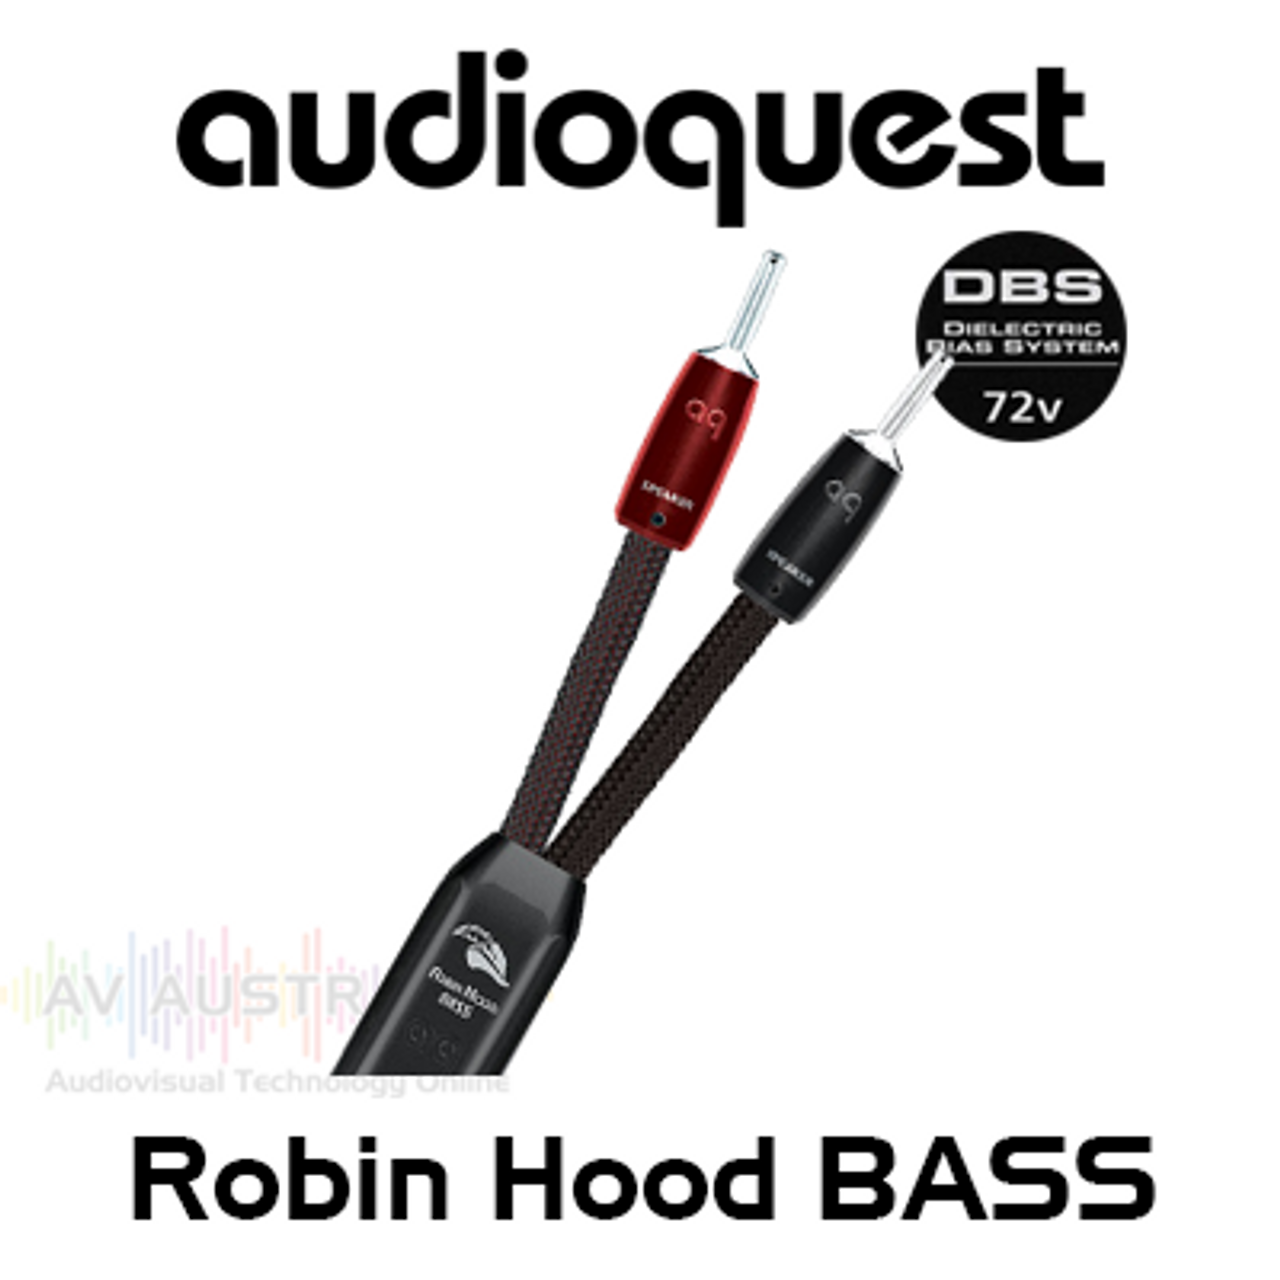 AudioQuest Folk Hero Series Robin Hood BASS 72V DBS Speaker Cable (Pair)